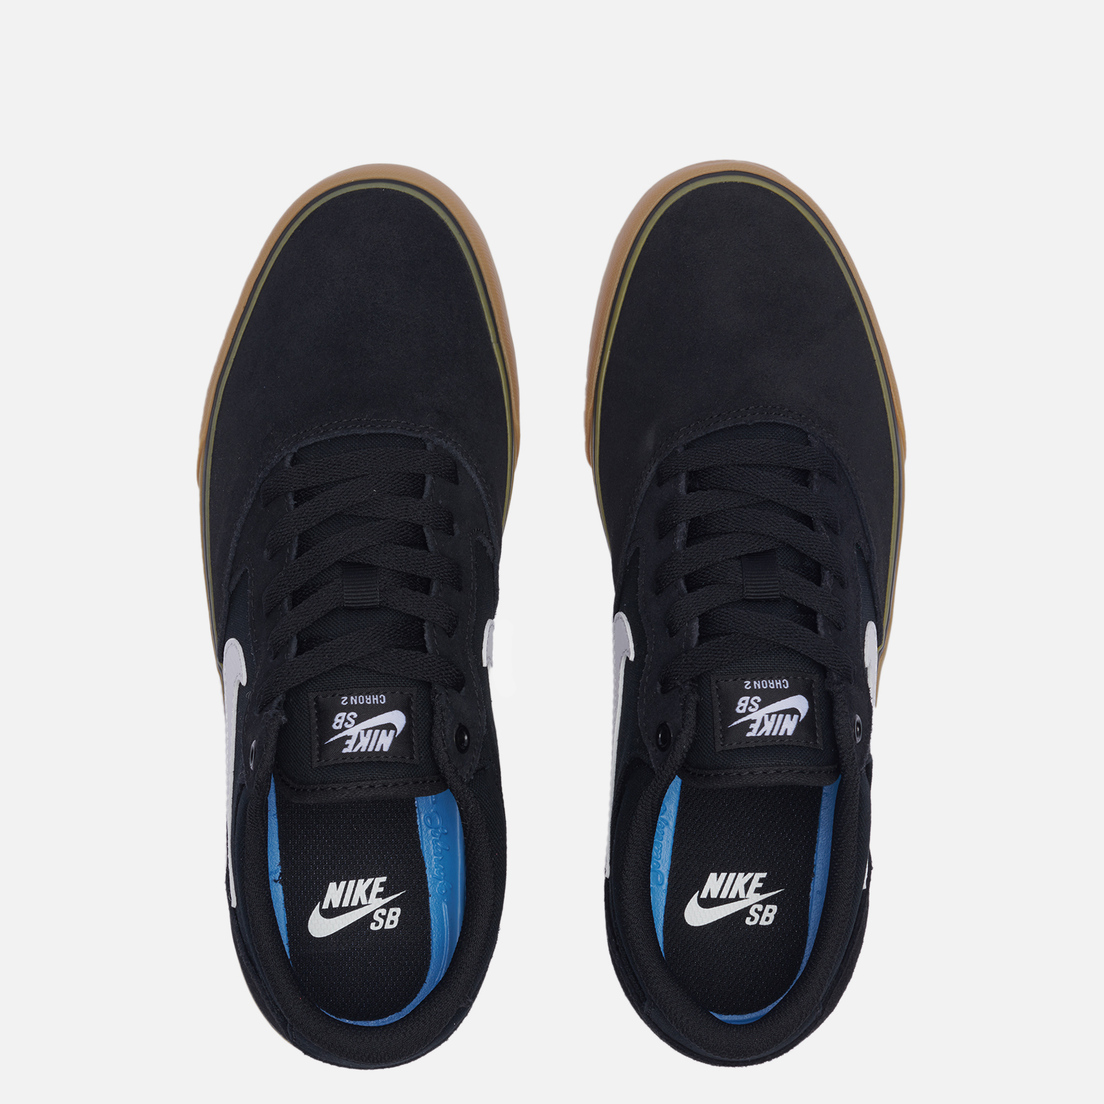 Nike SB Мужские кроссовки Chron 2